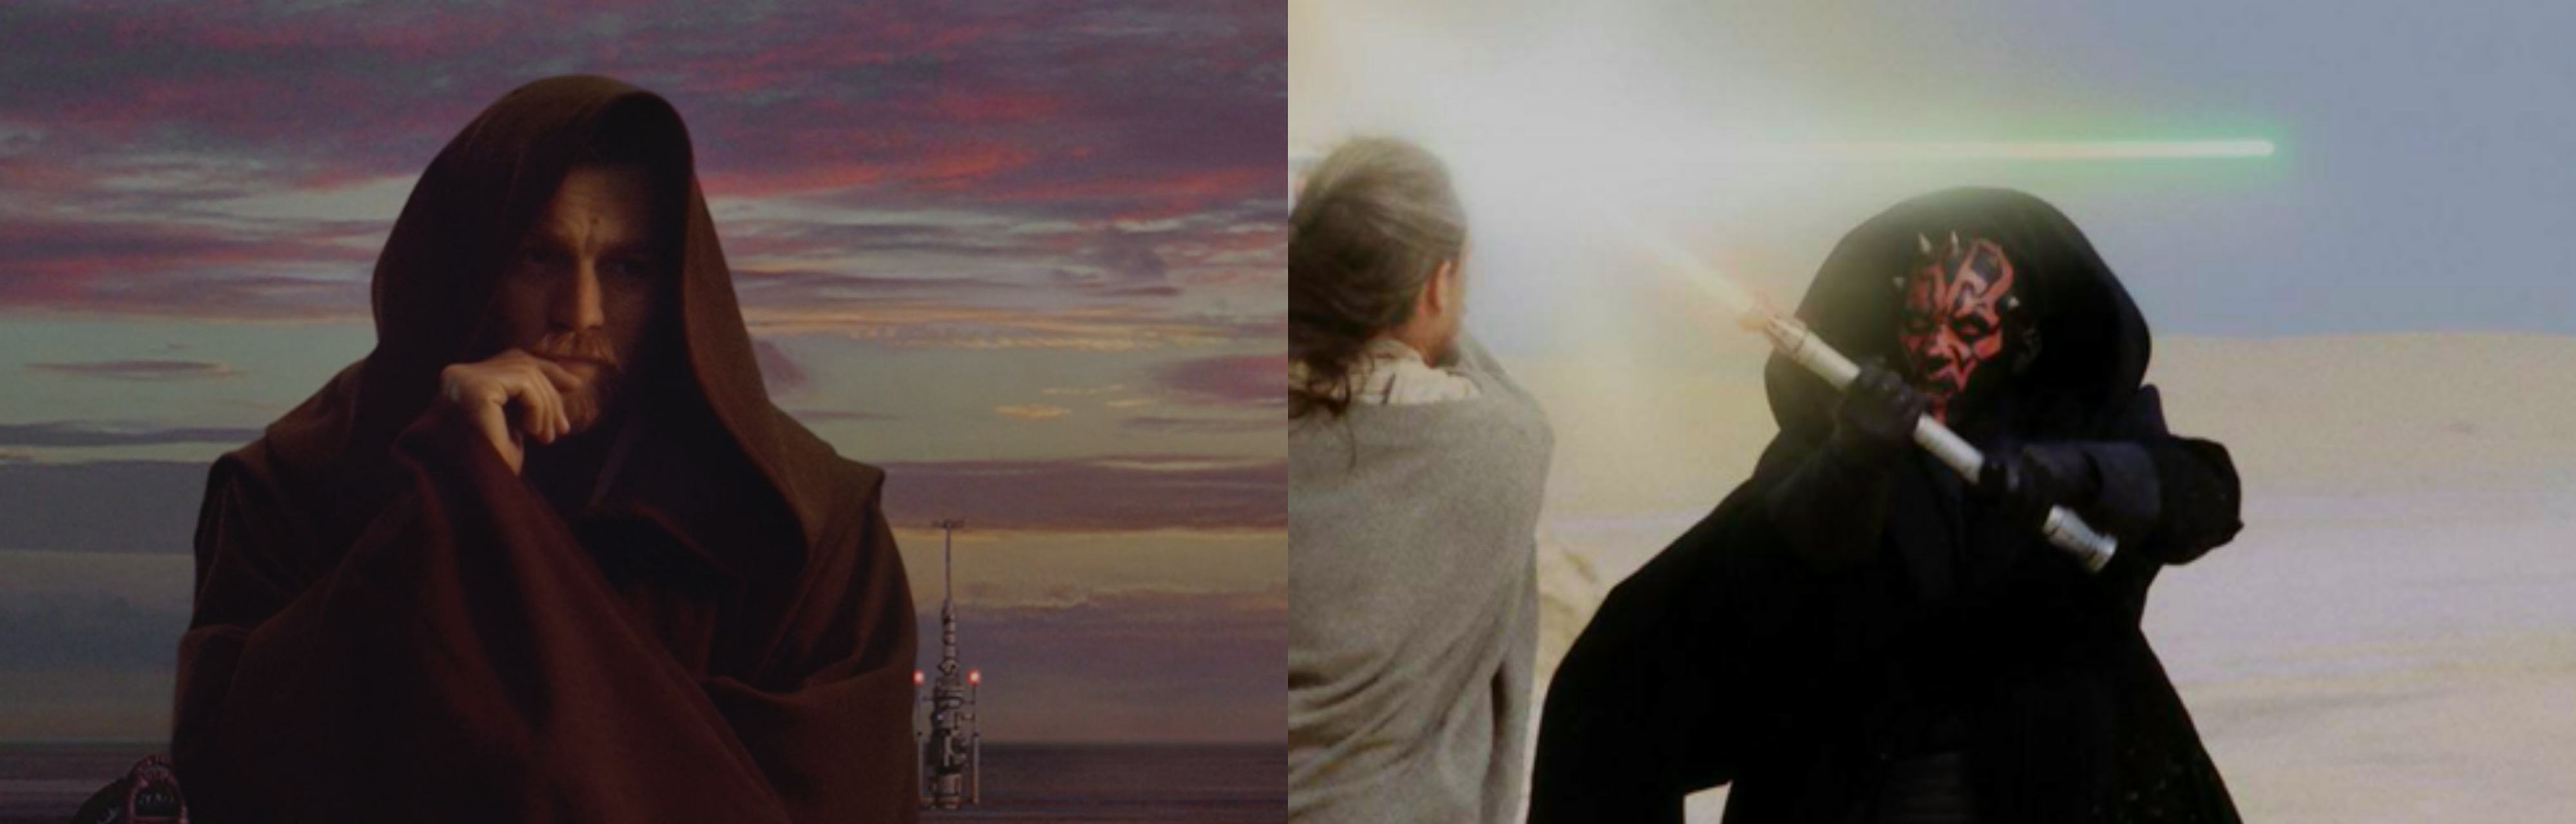 Obi-Wan Kenobi Is Probably Only Good for One Episode in 'Star Wars Rebels'